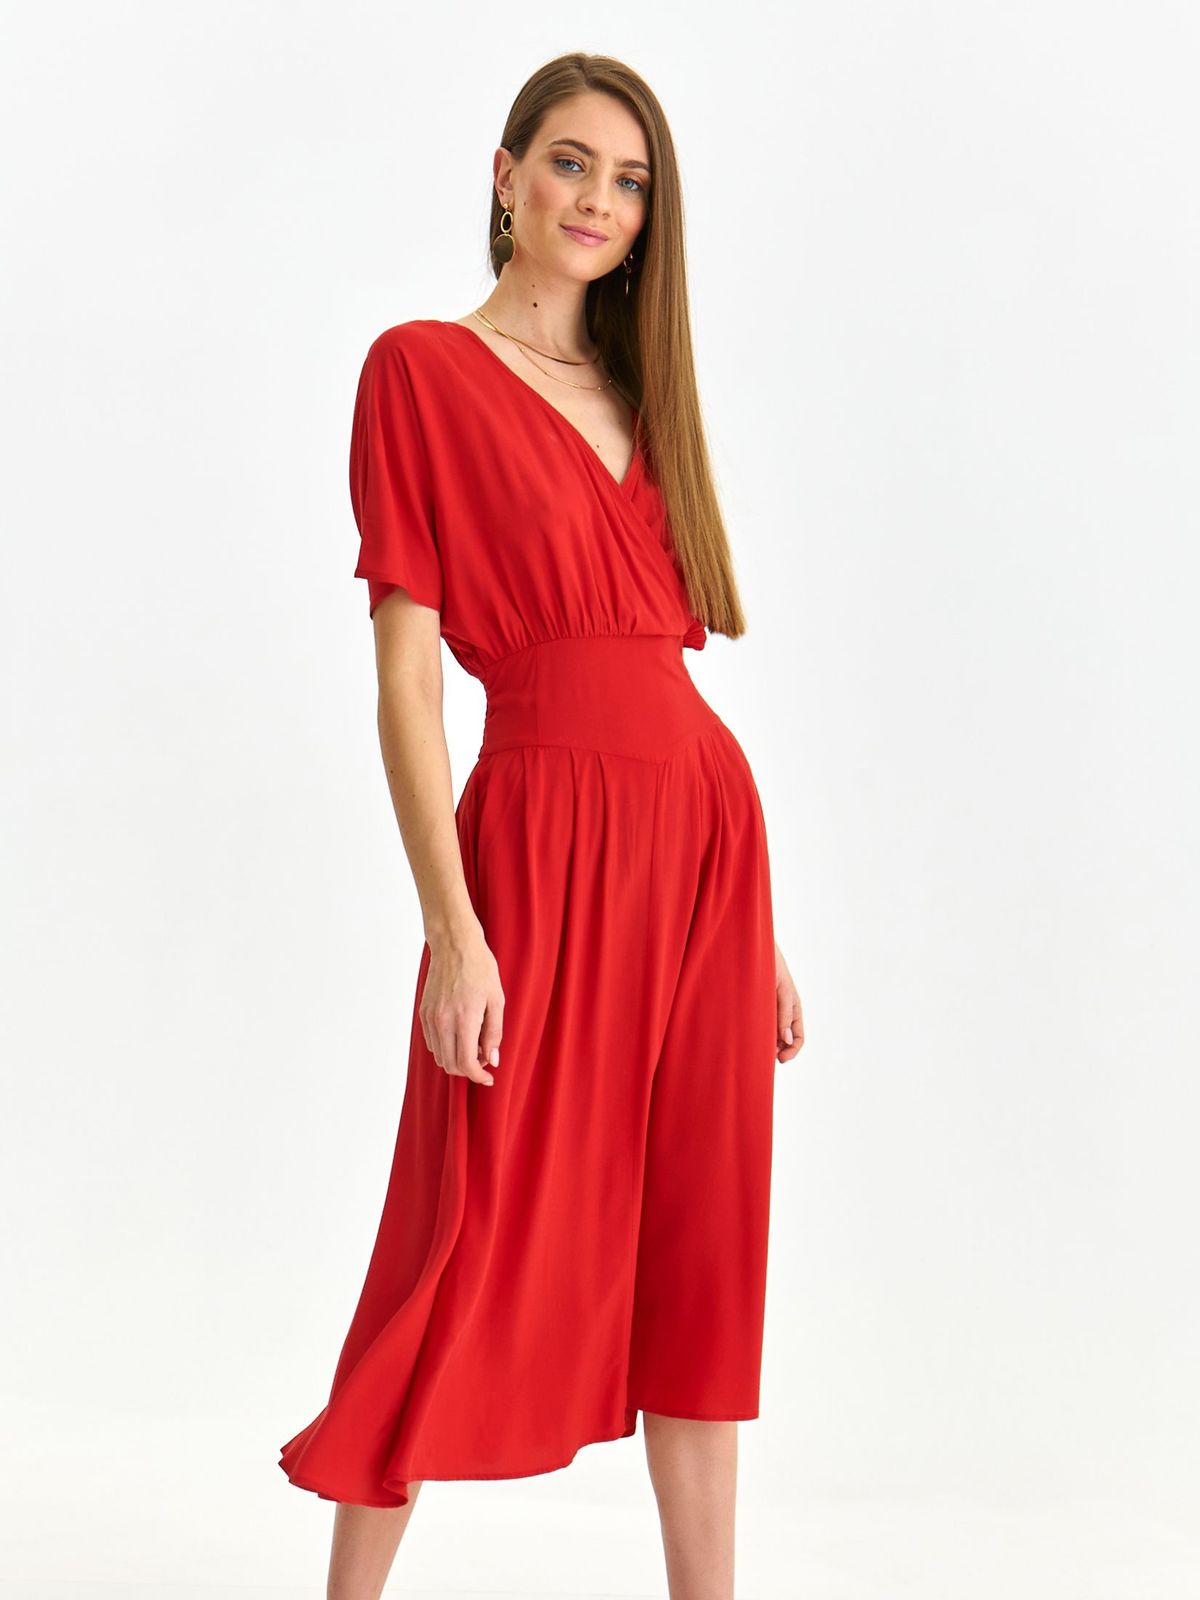 Red dress thin fabric midi cloche wrap over front